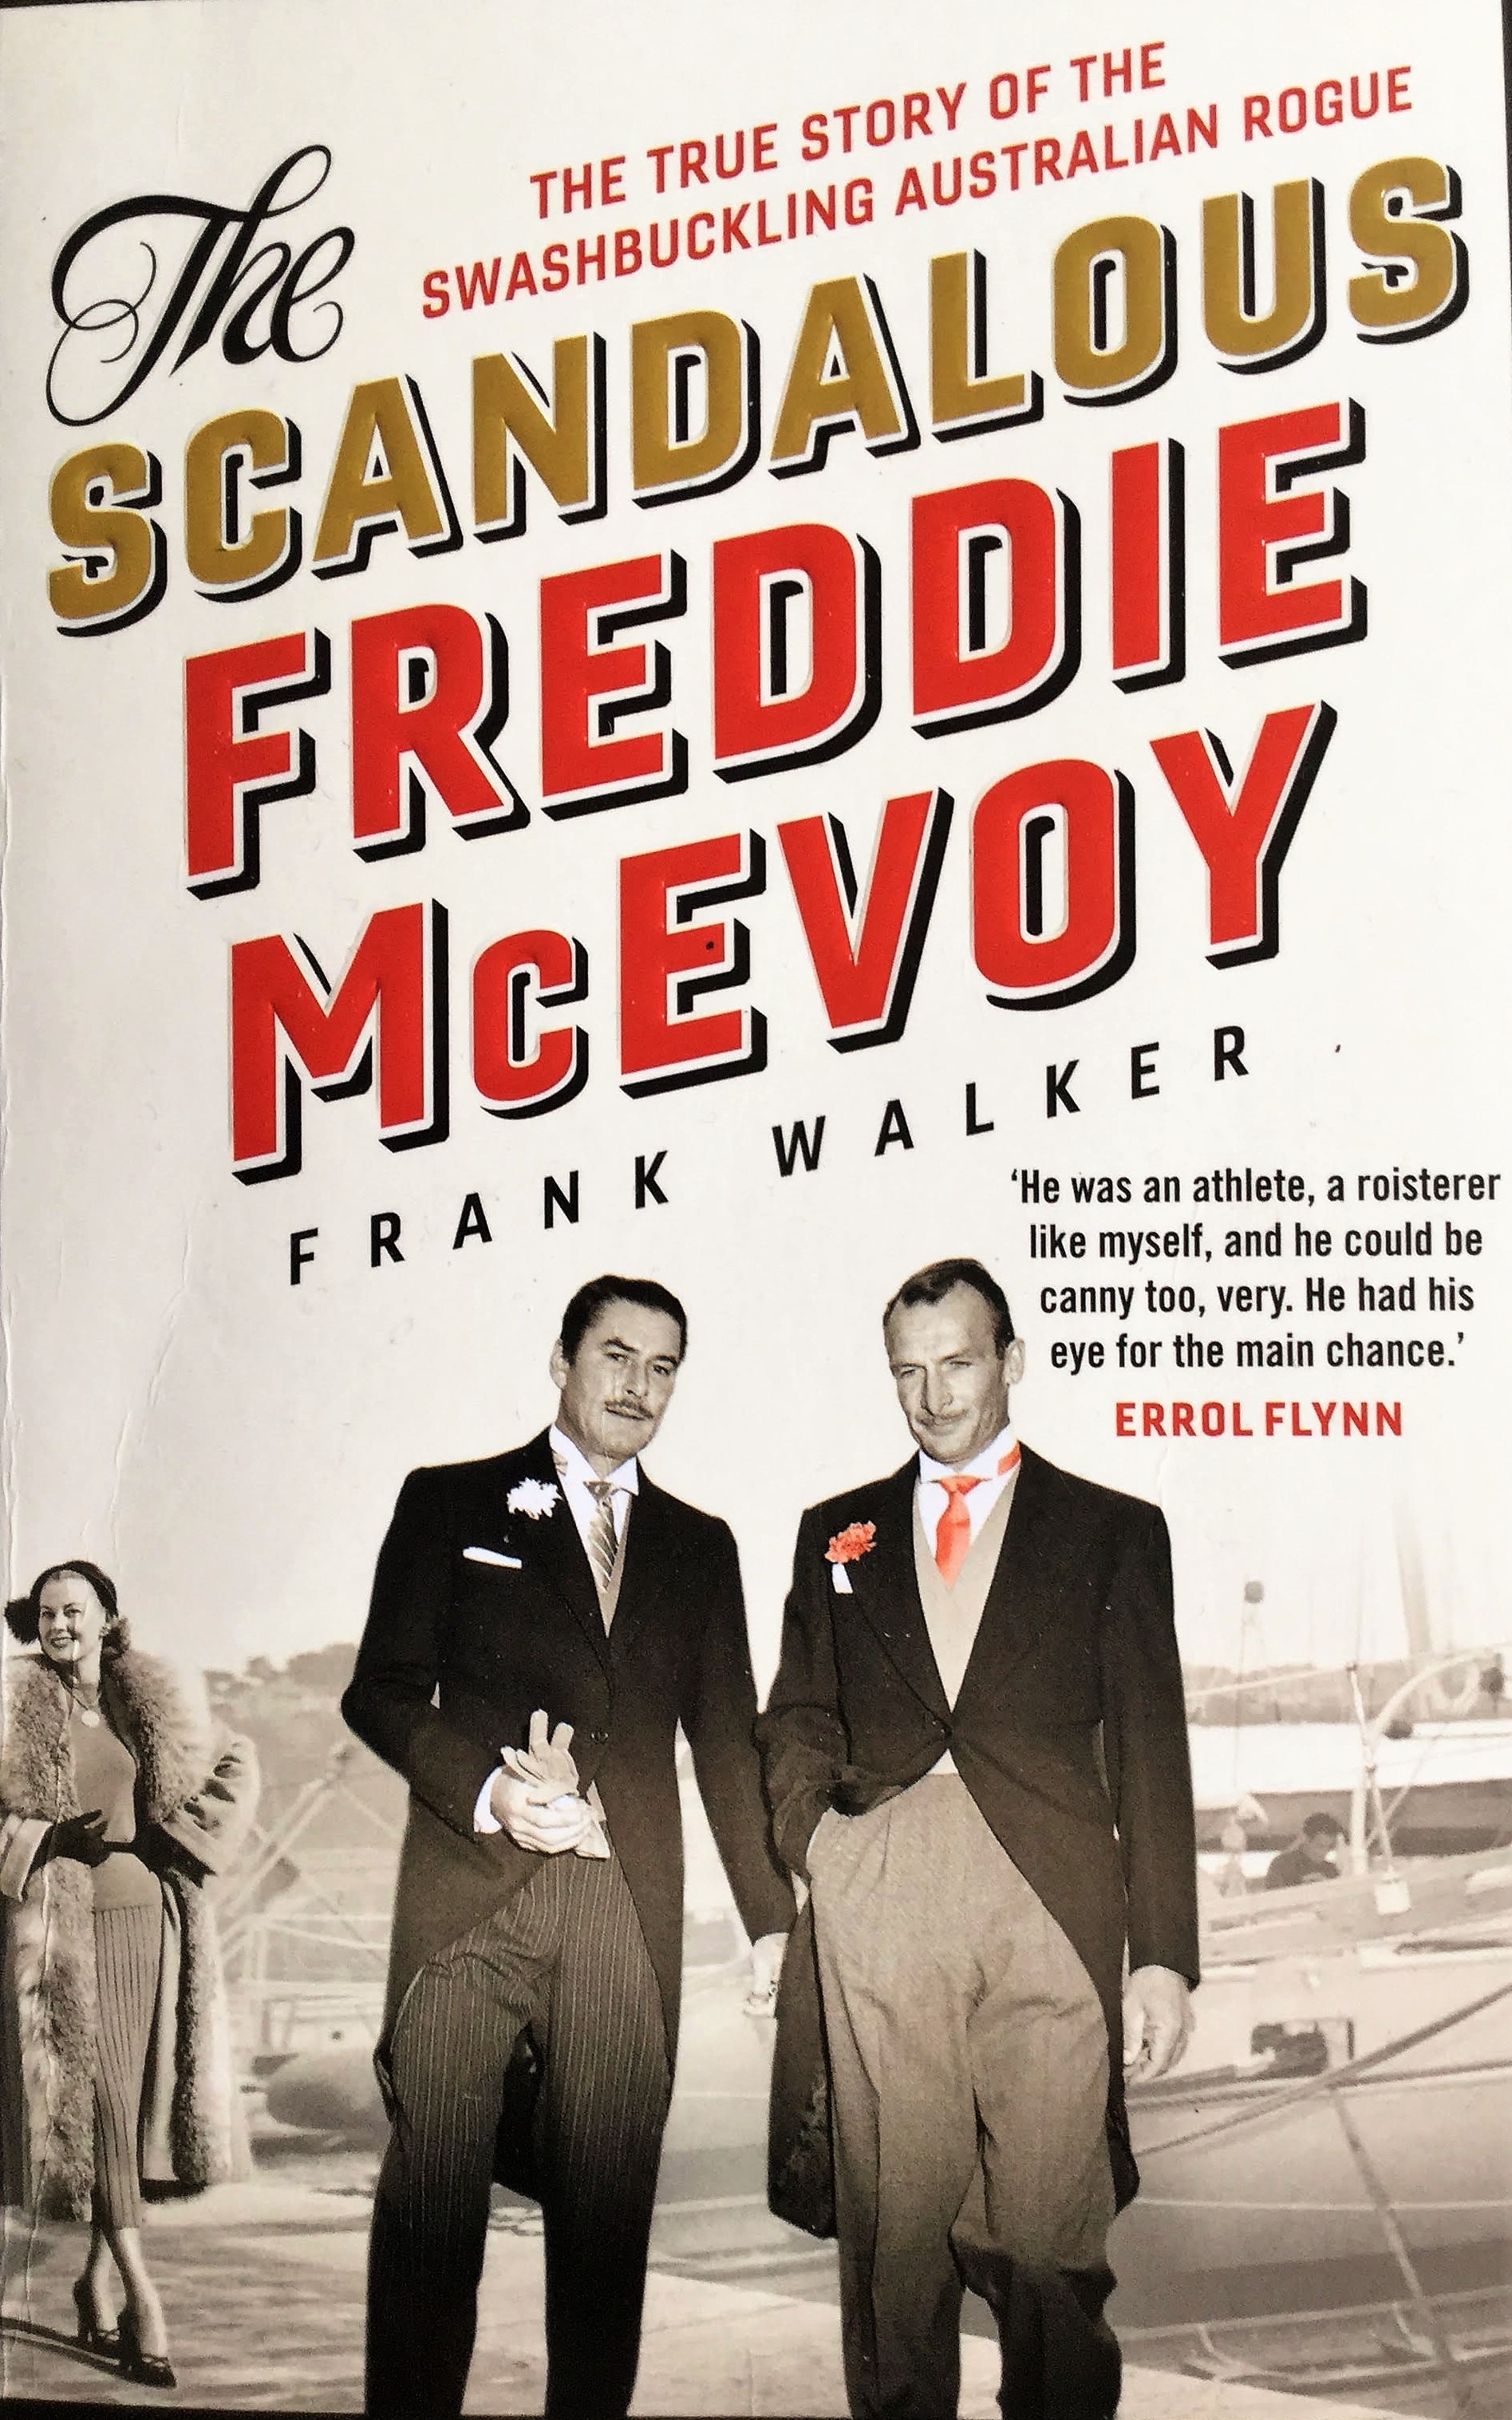 McEVOY, Freddie (1907-1951)